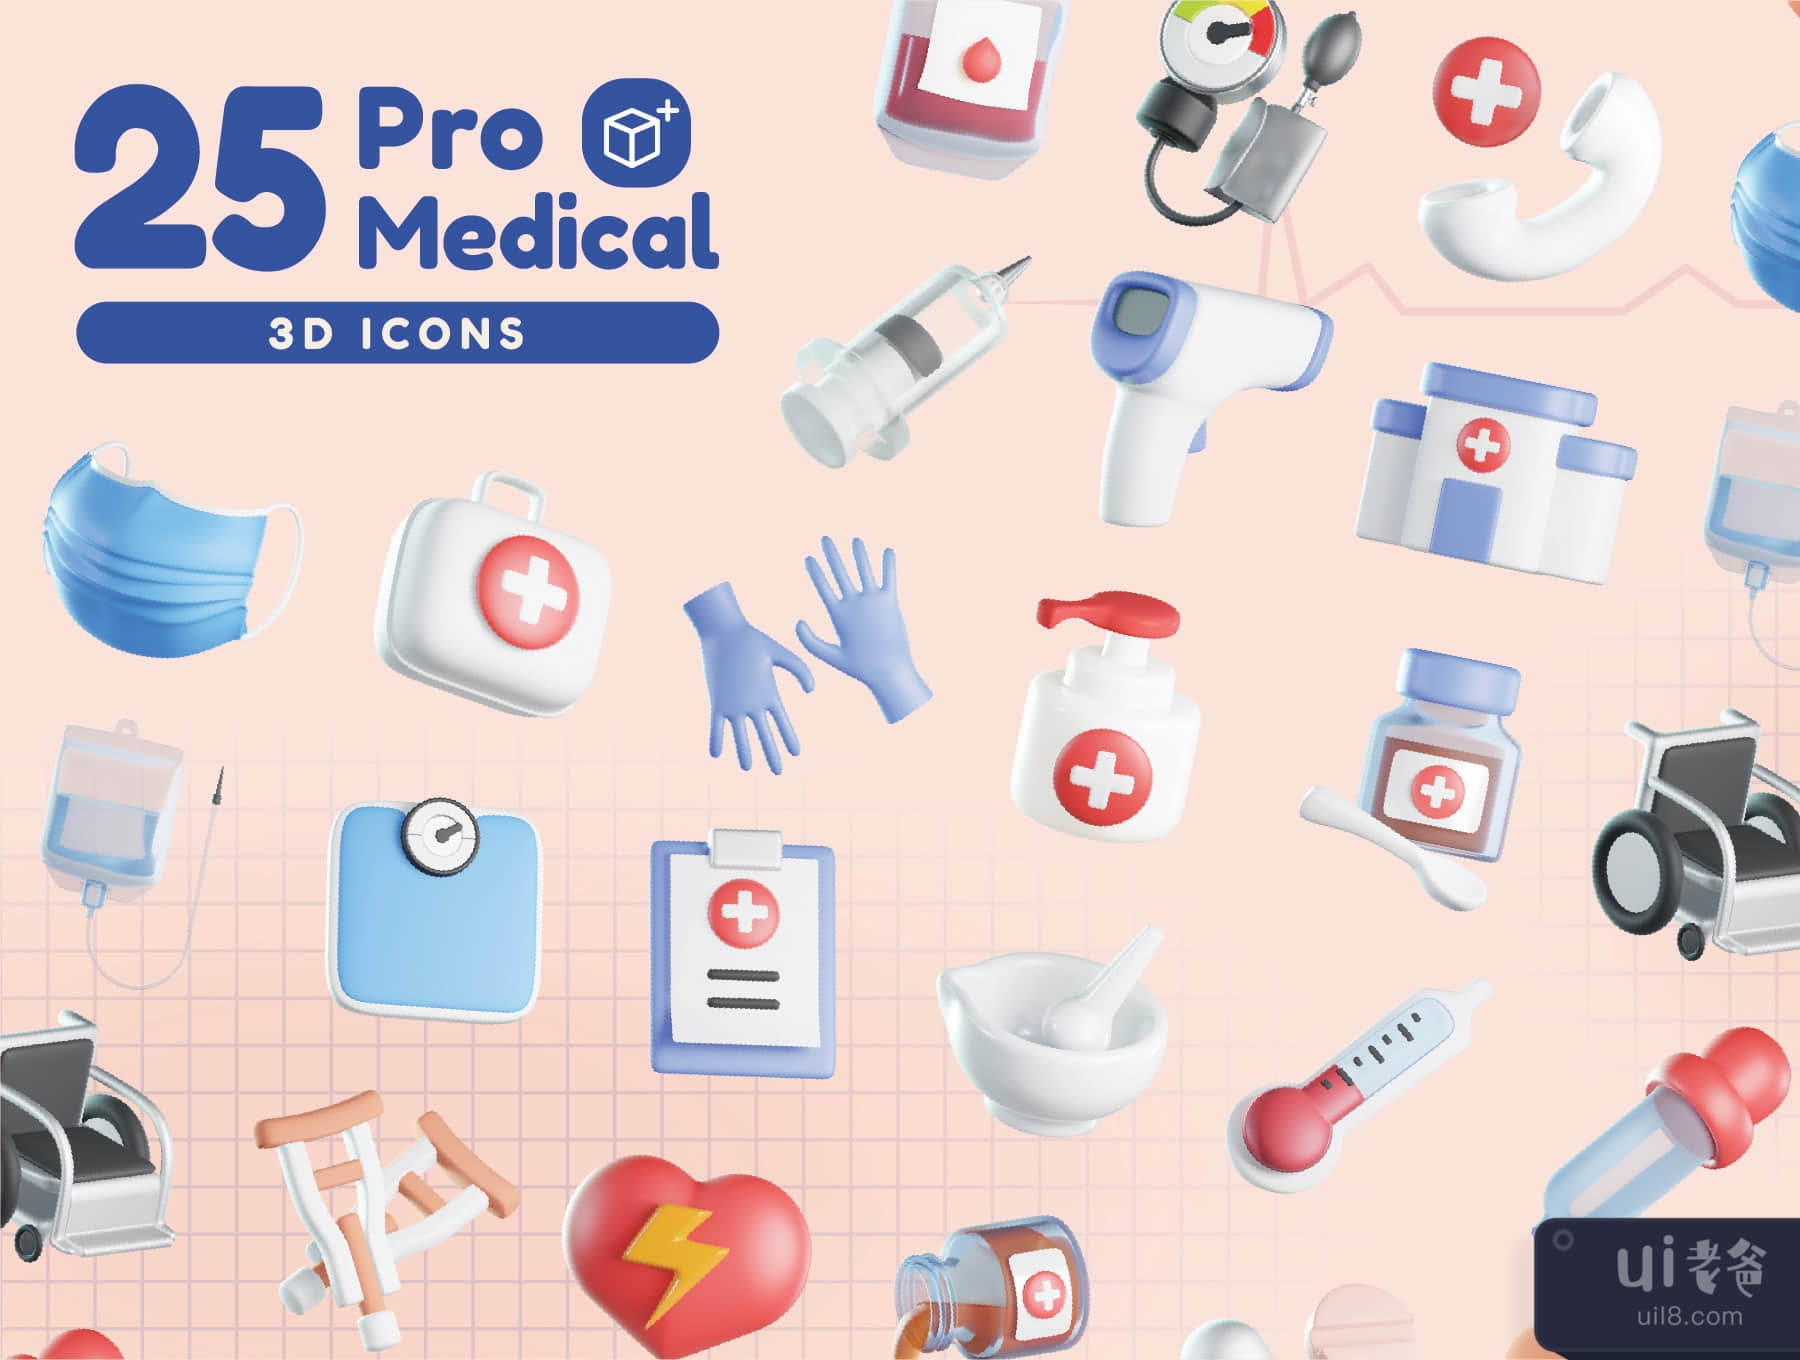 专业医疗3D图标 (Pro Medical 3D Icons)插图4